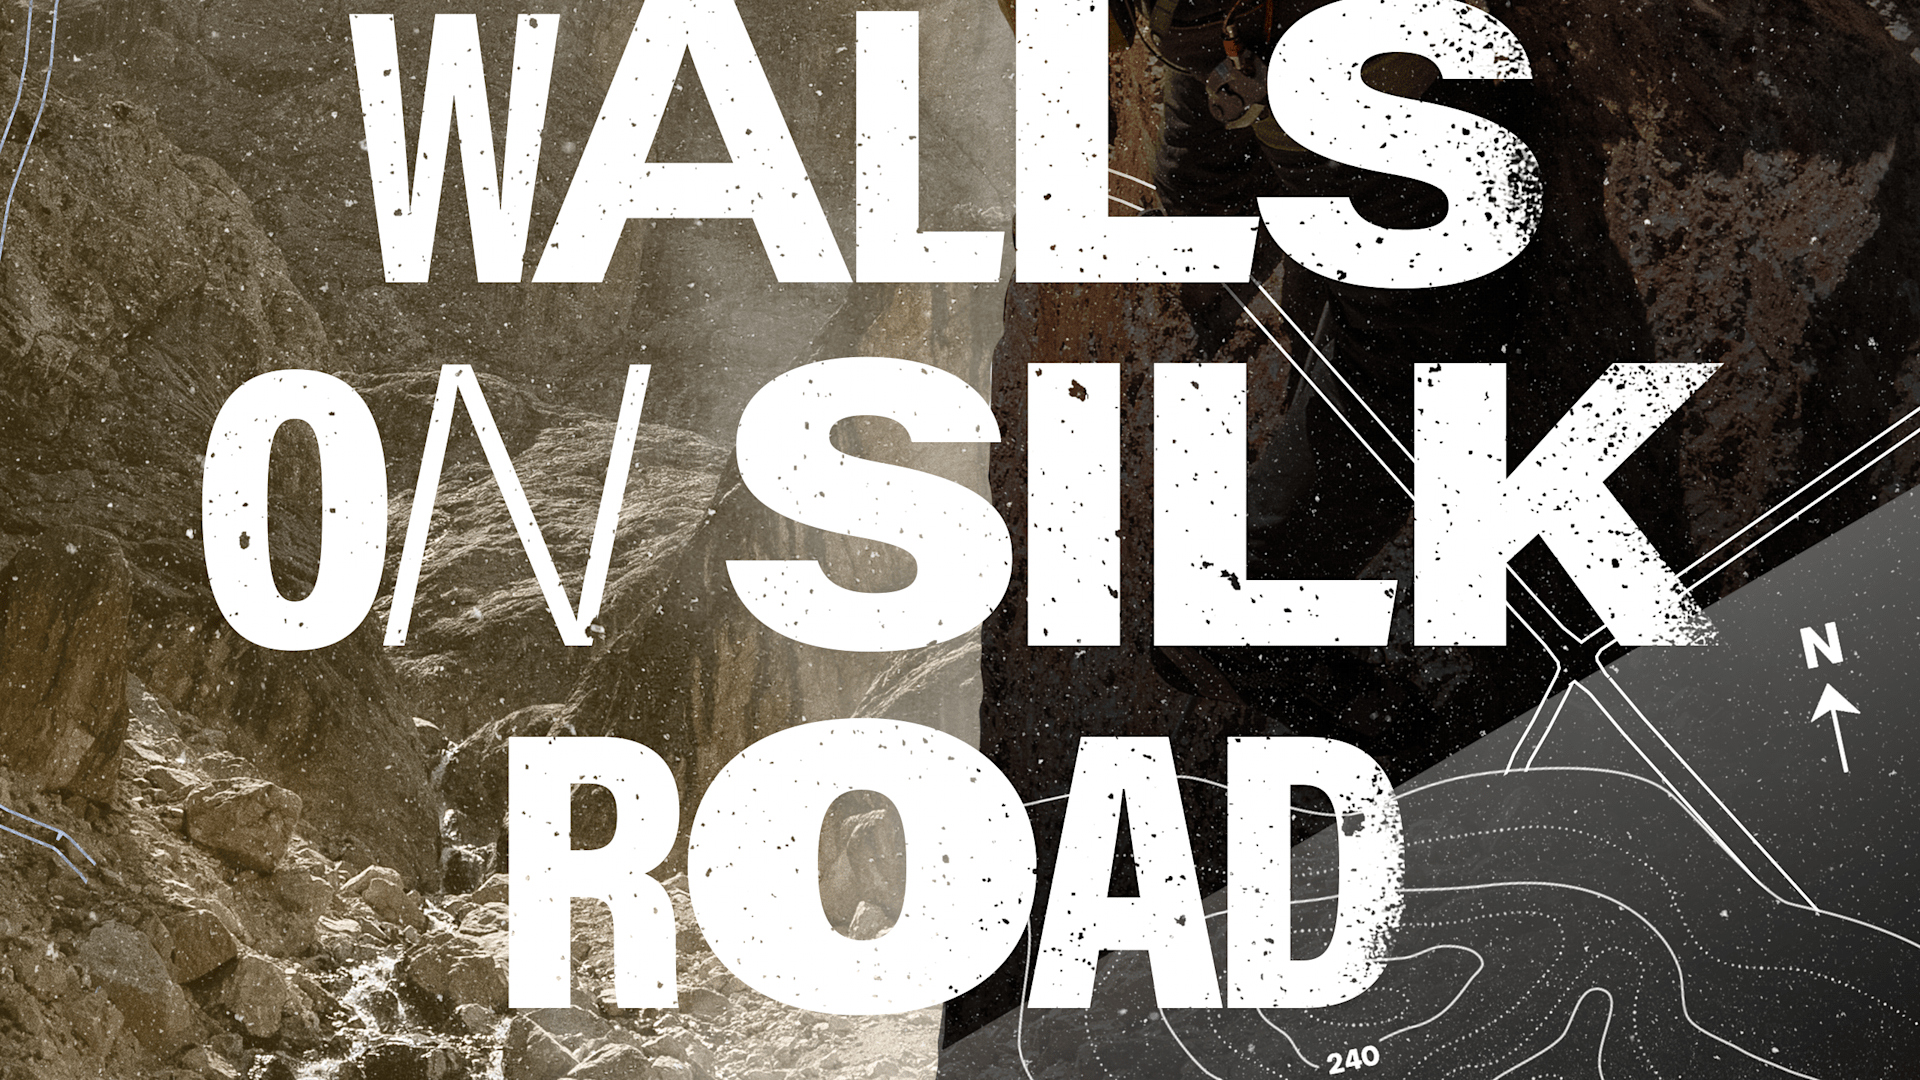 Walls on Silk Road